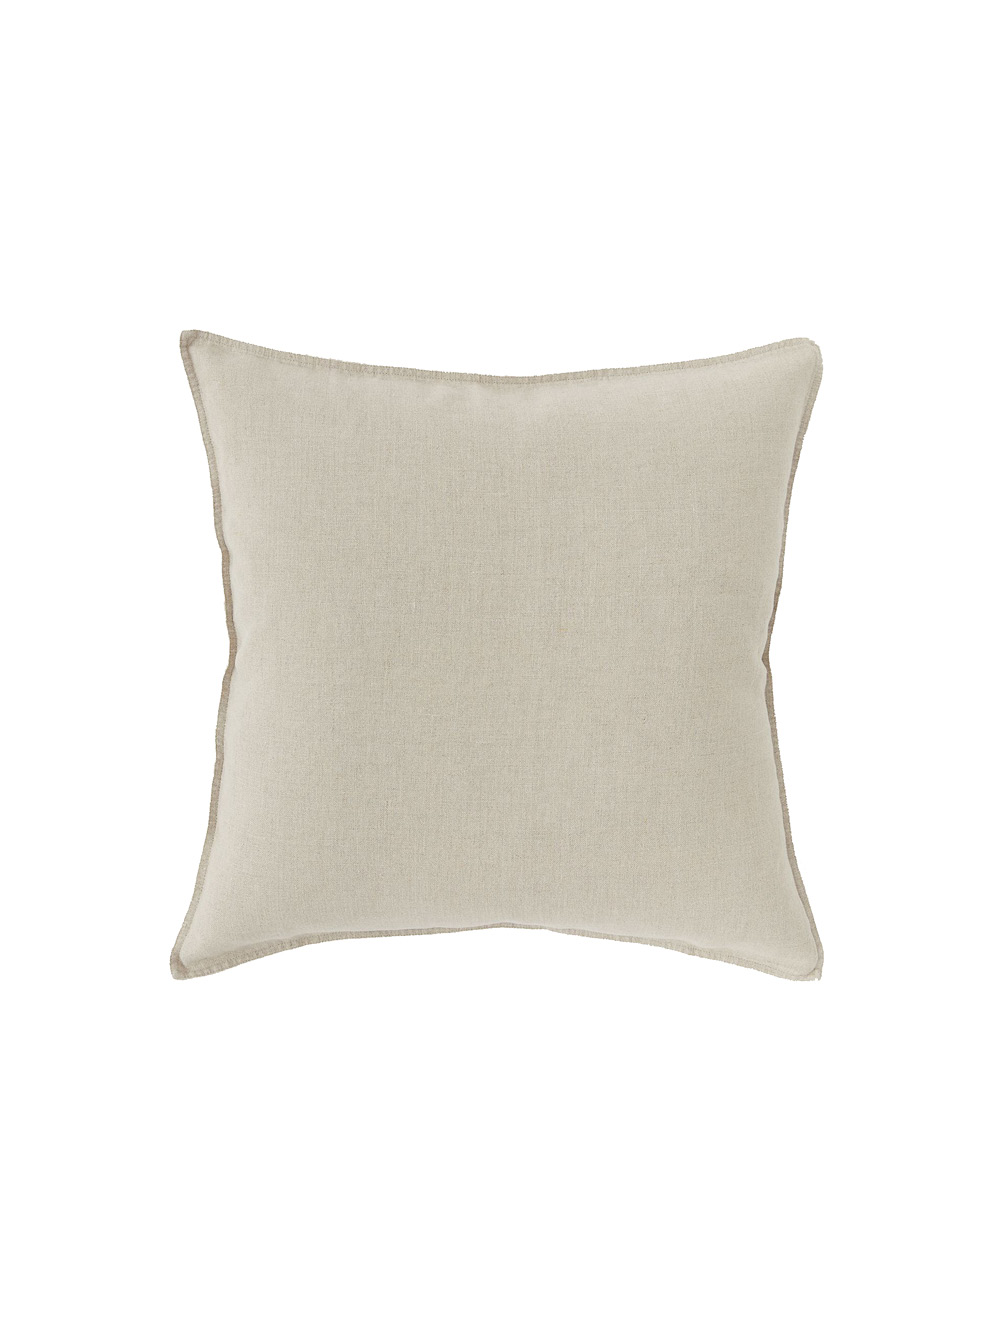 Linen Pillow Cushion Cover, H&M Home - Beige Natural